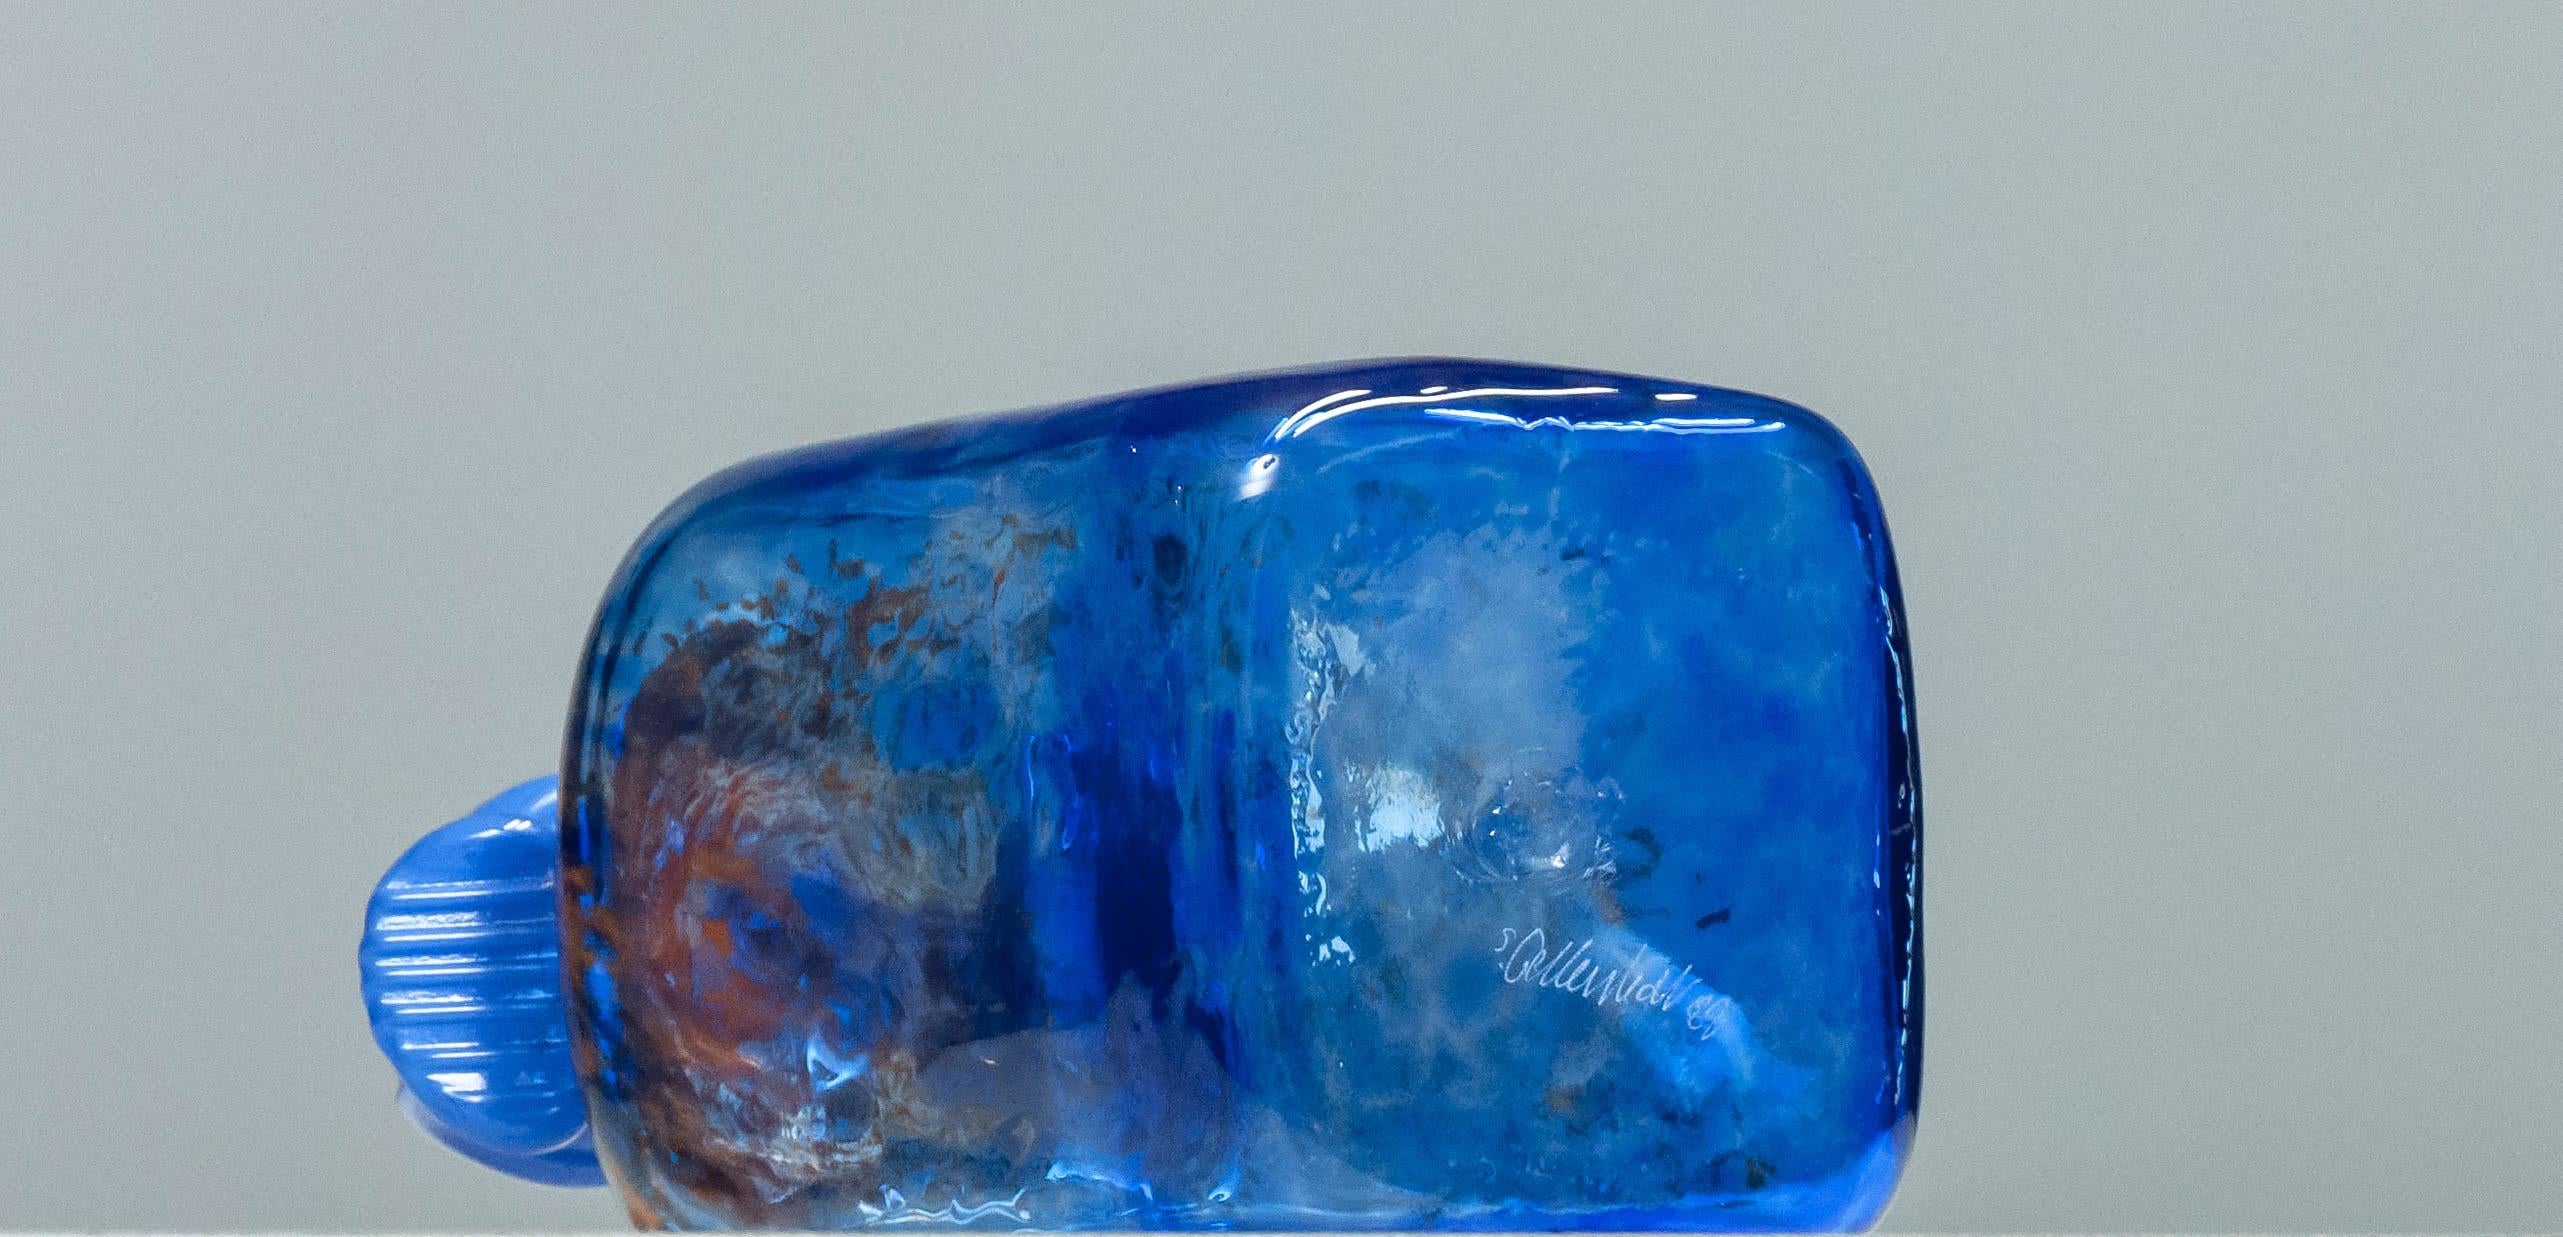 1980s Blue Art Glass Bottle Handmade by Staffan Gellerstedt at Studio Glashyttan For Sale 5